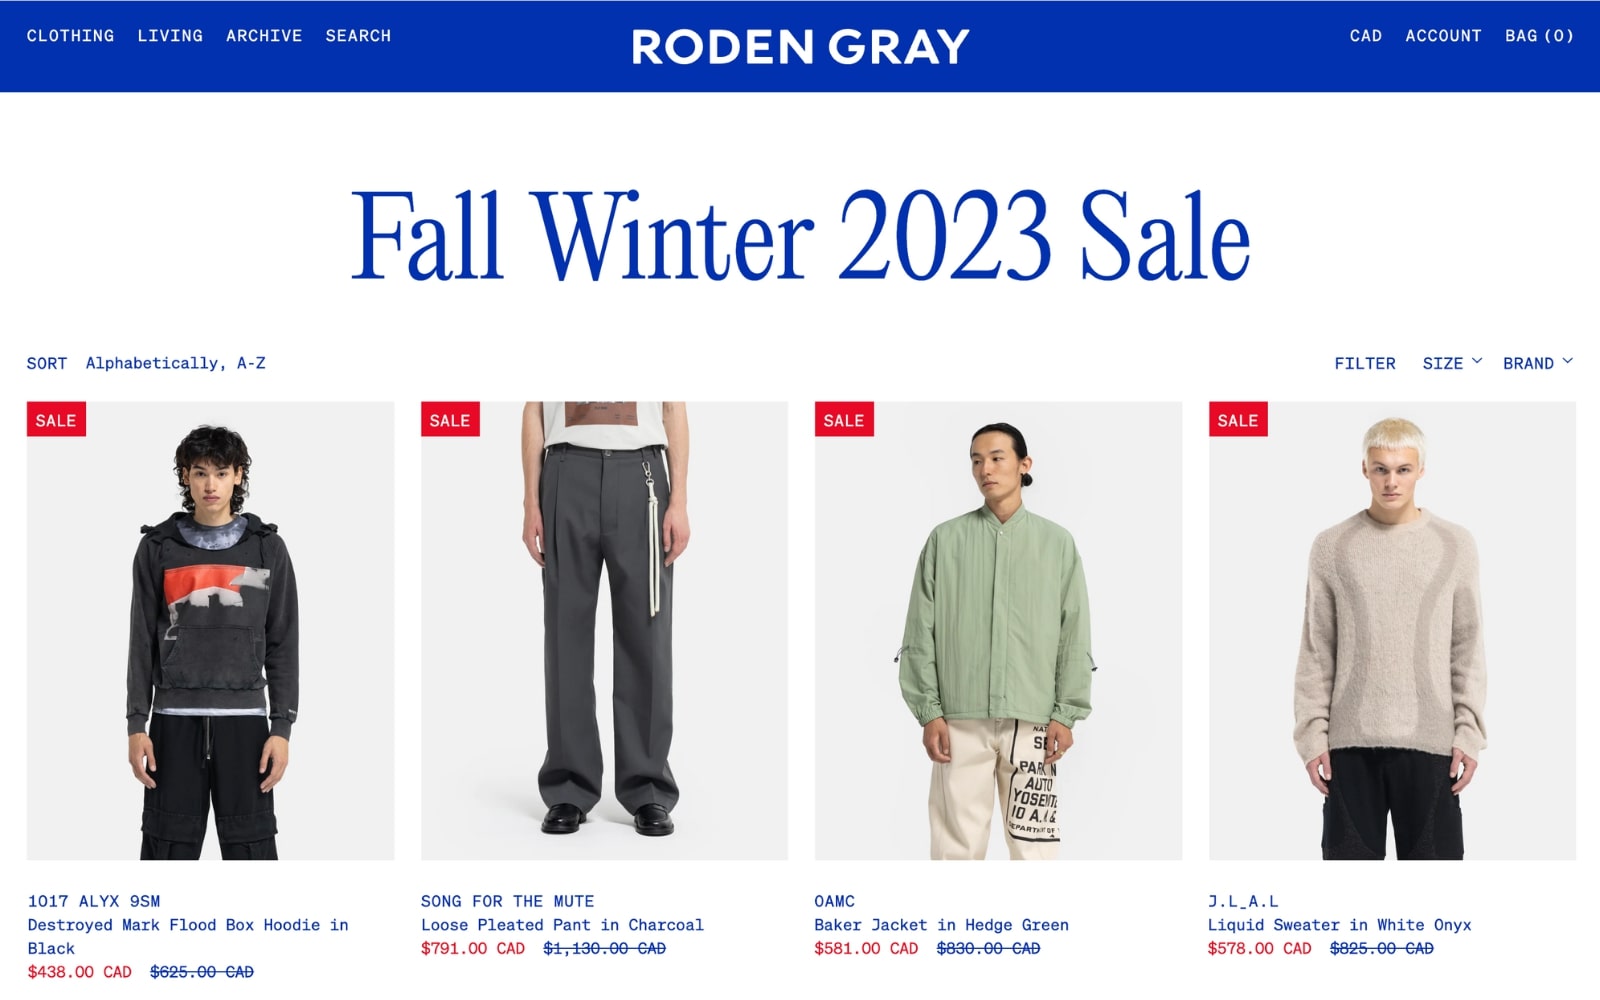 RODEN GRAY’s website